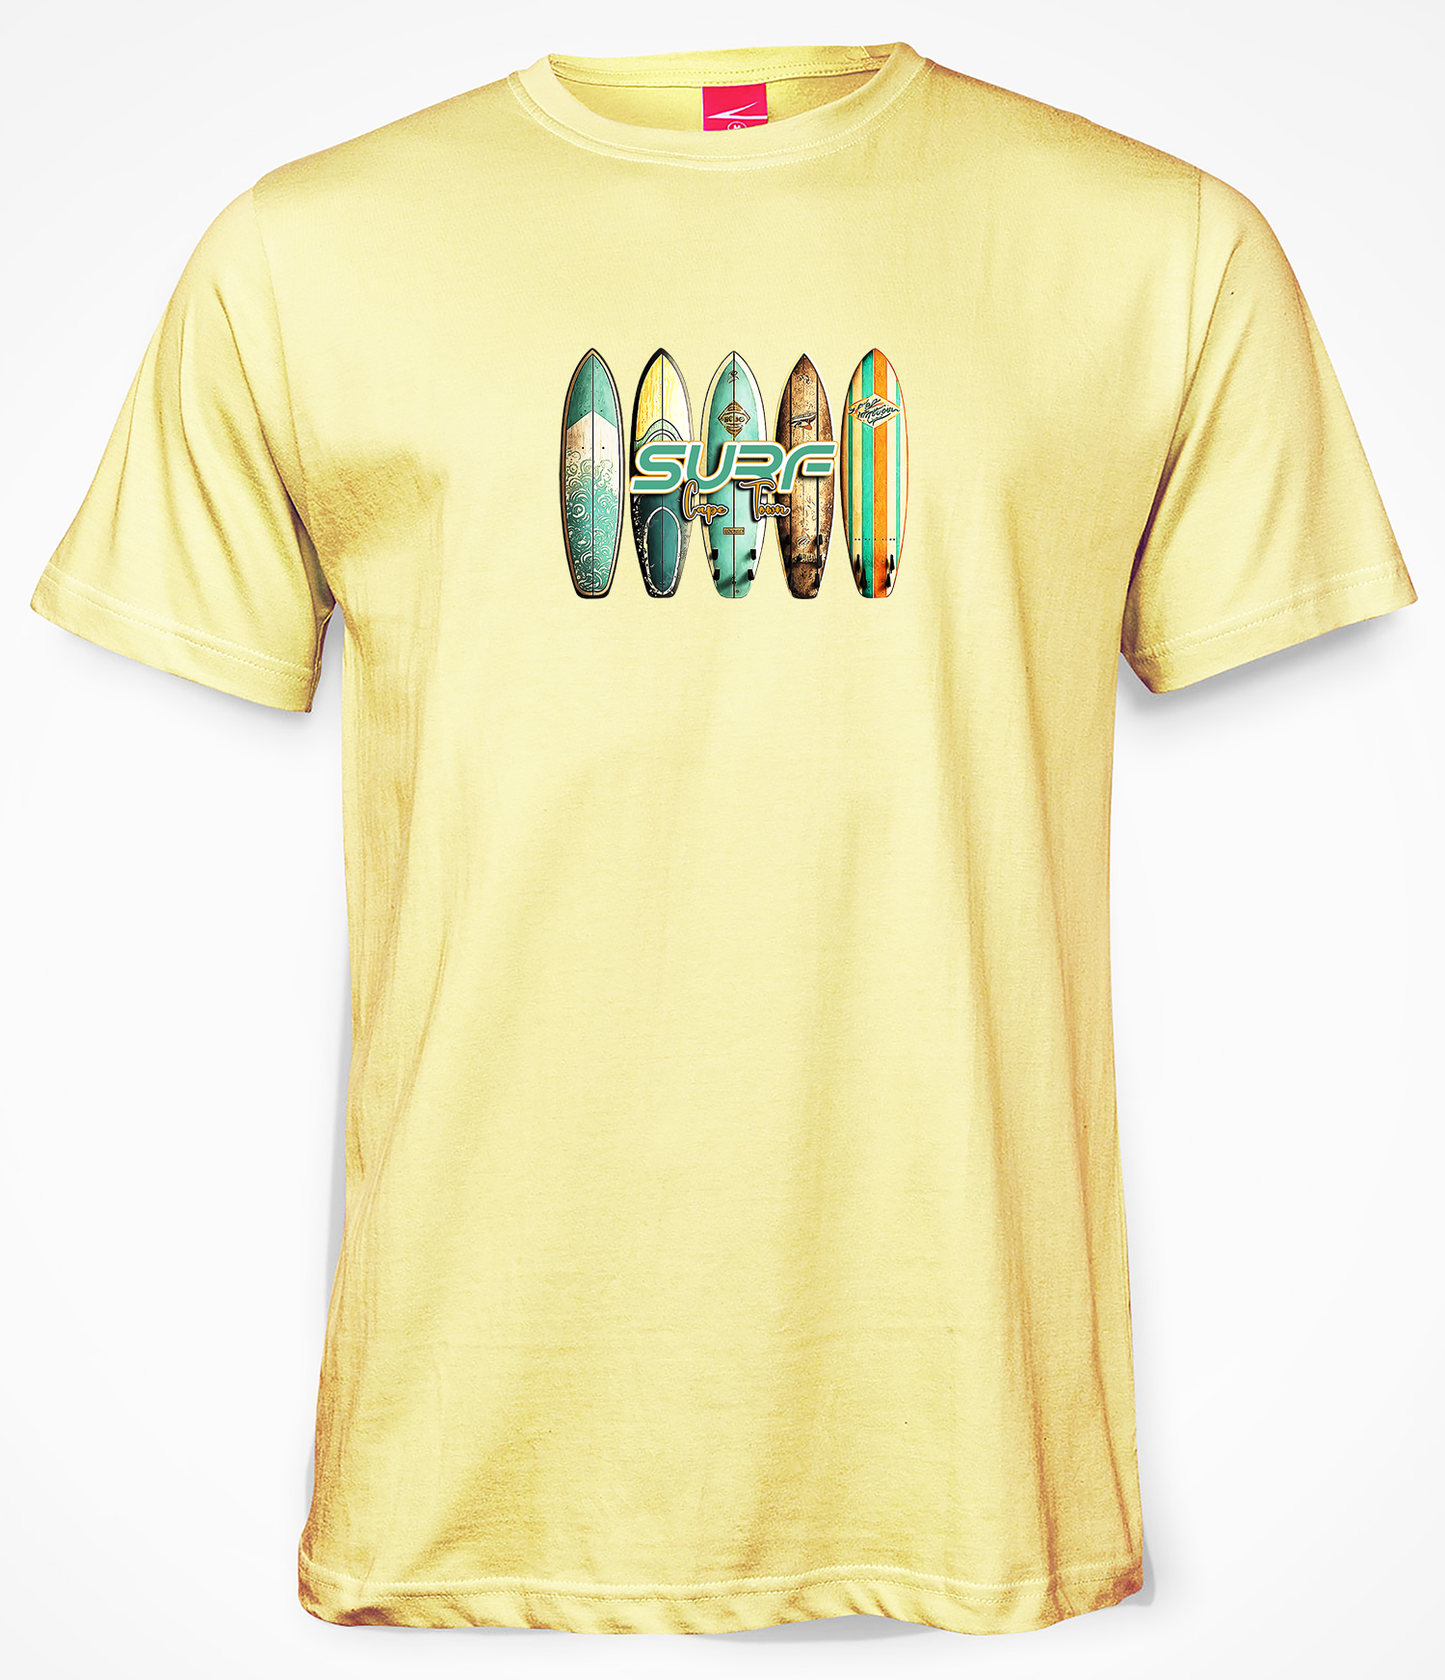 Petrol Clothing SURF CAPE TOWN - Yellow Lemon T-shirt